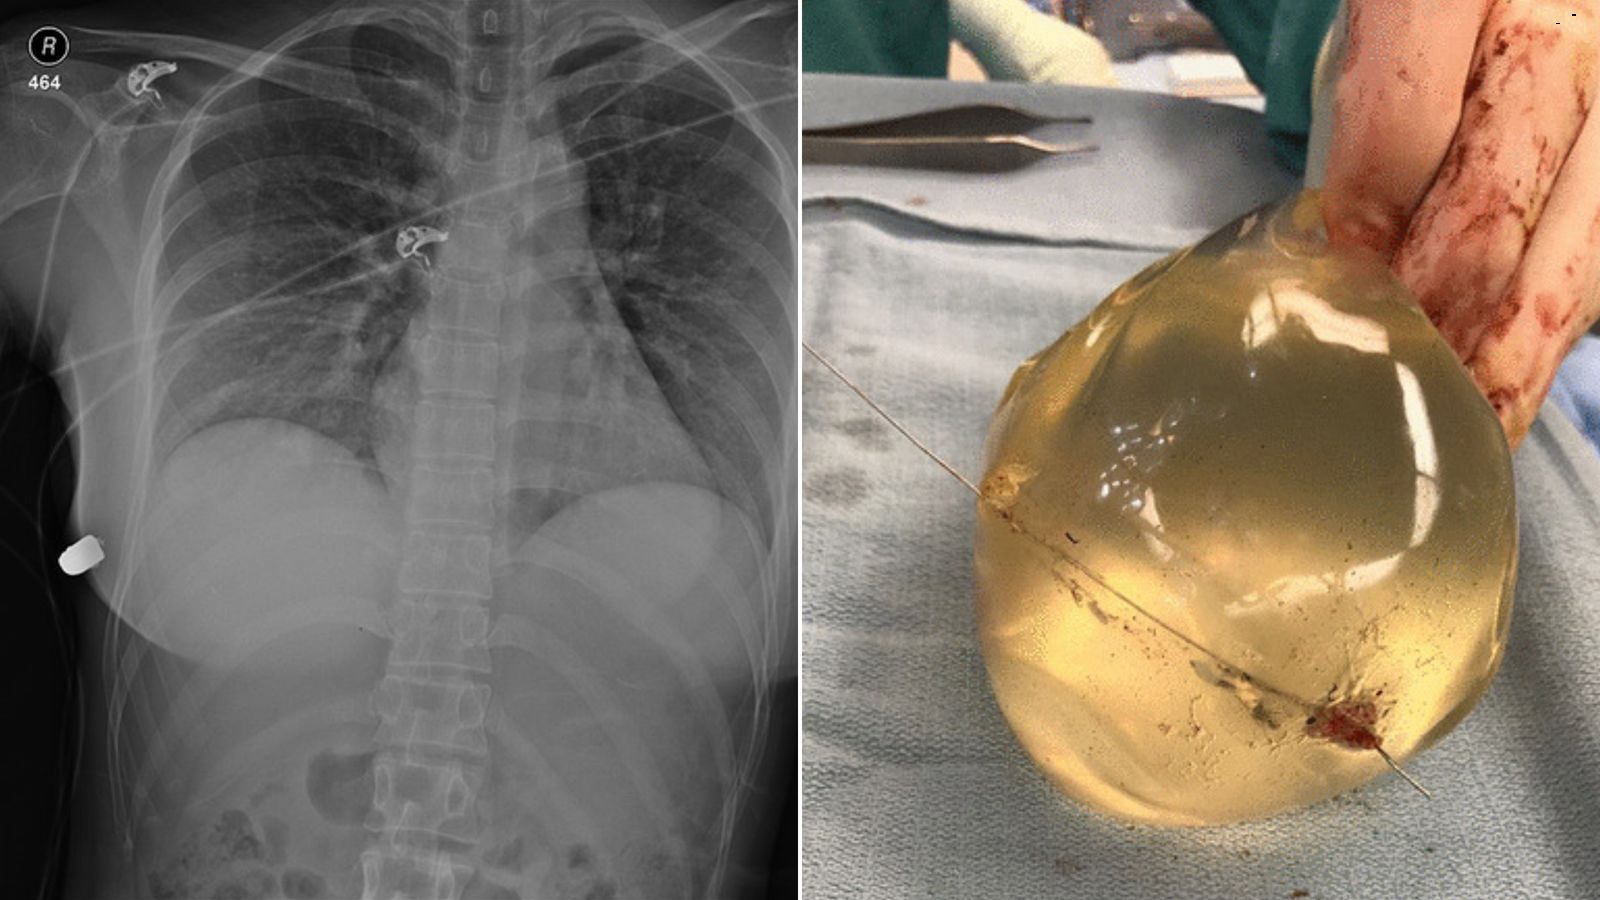 Woman left heartbroken after her double-D breast implants burst